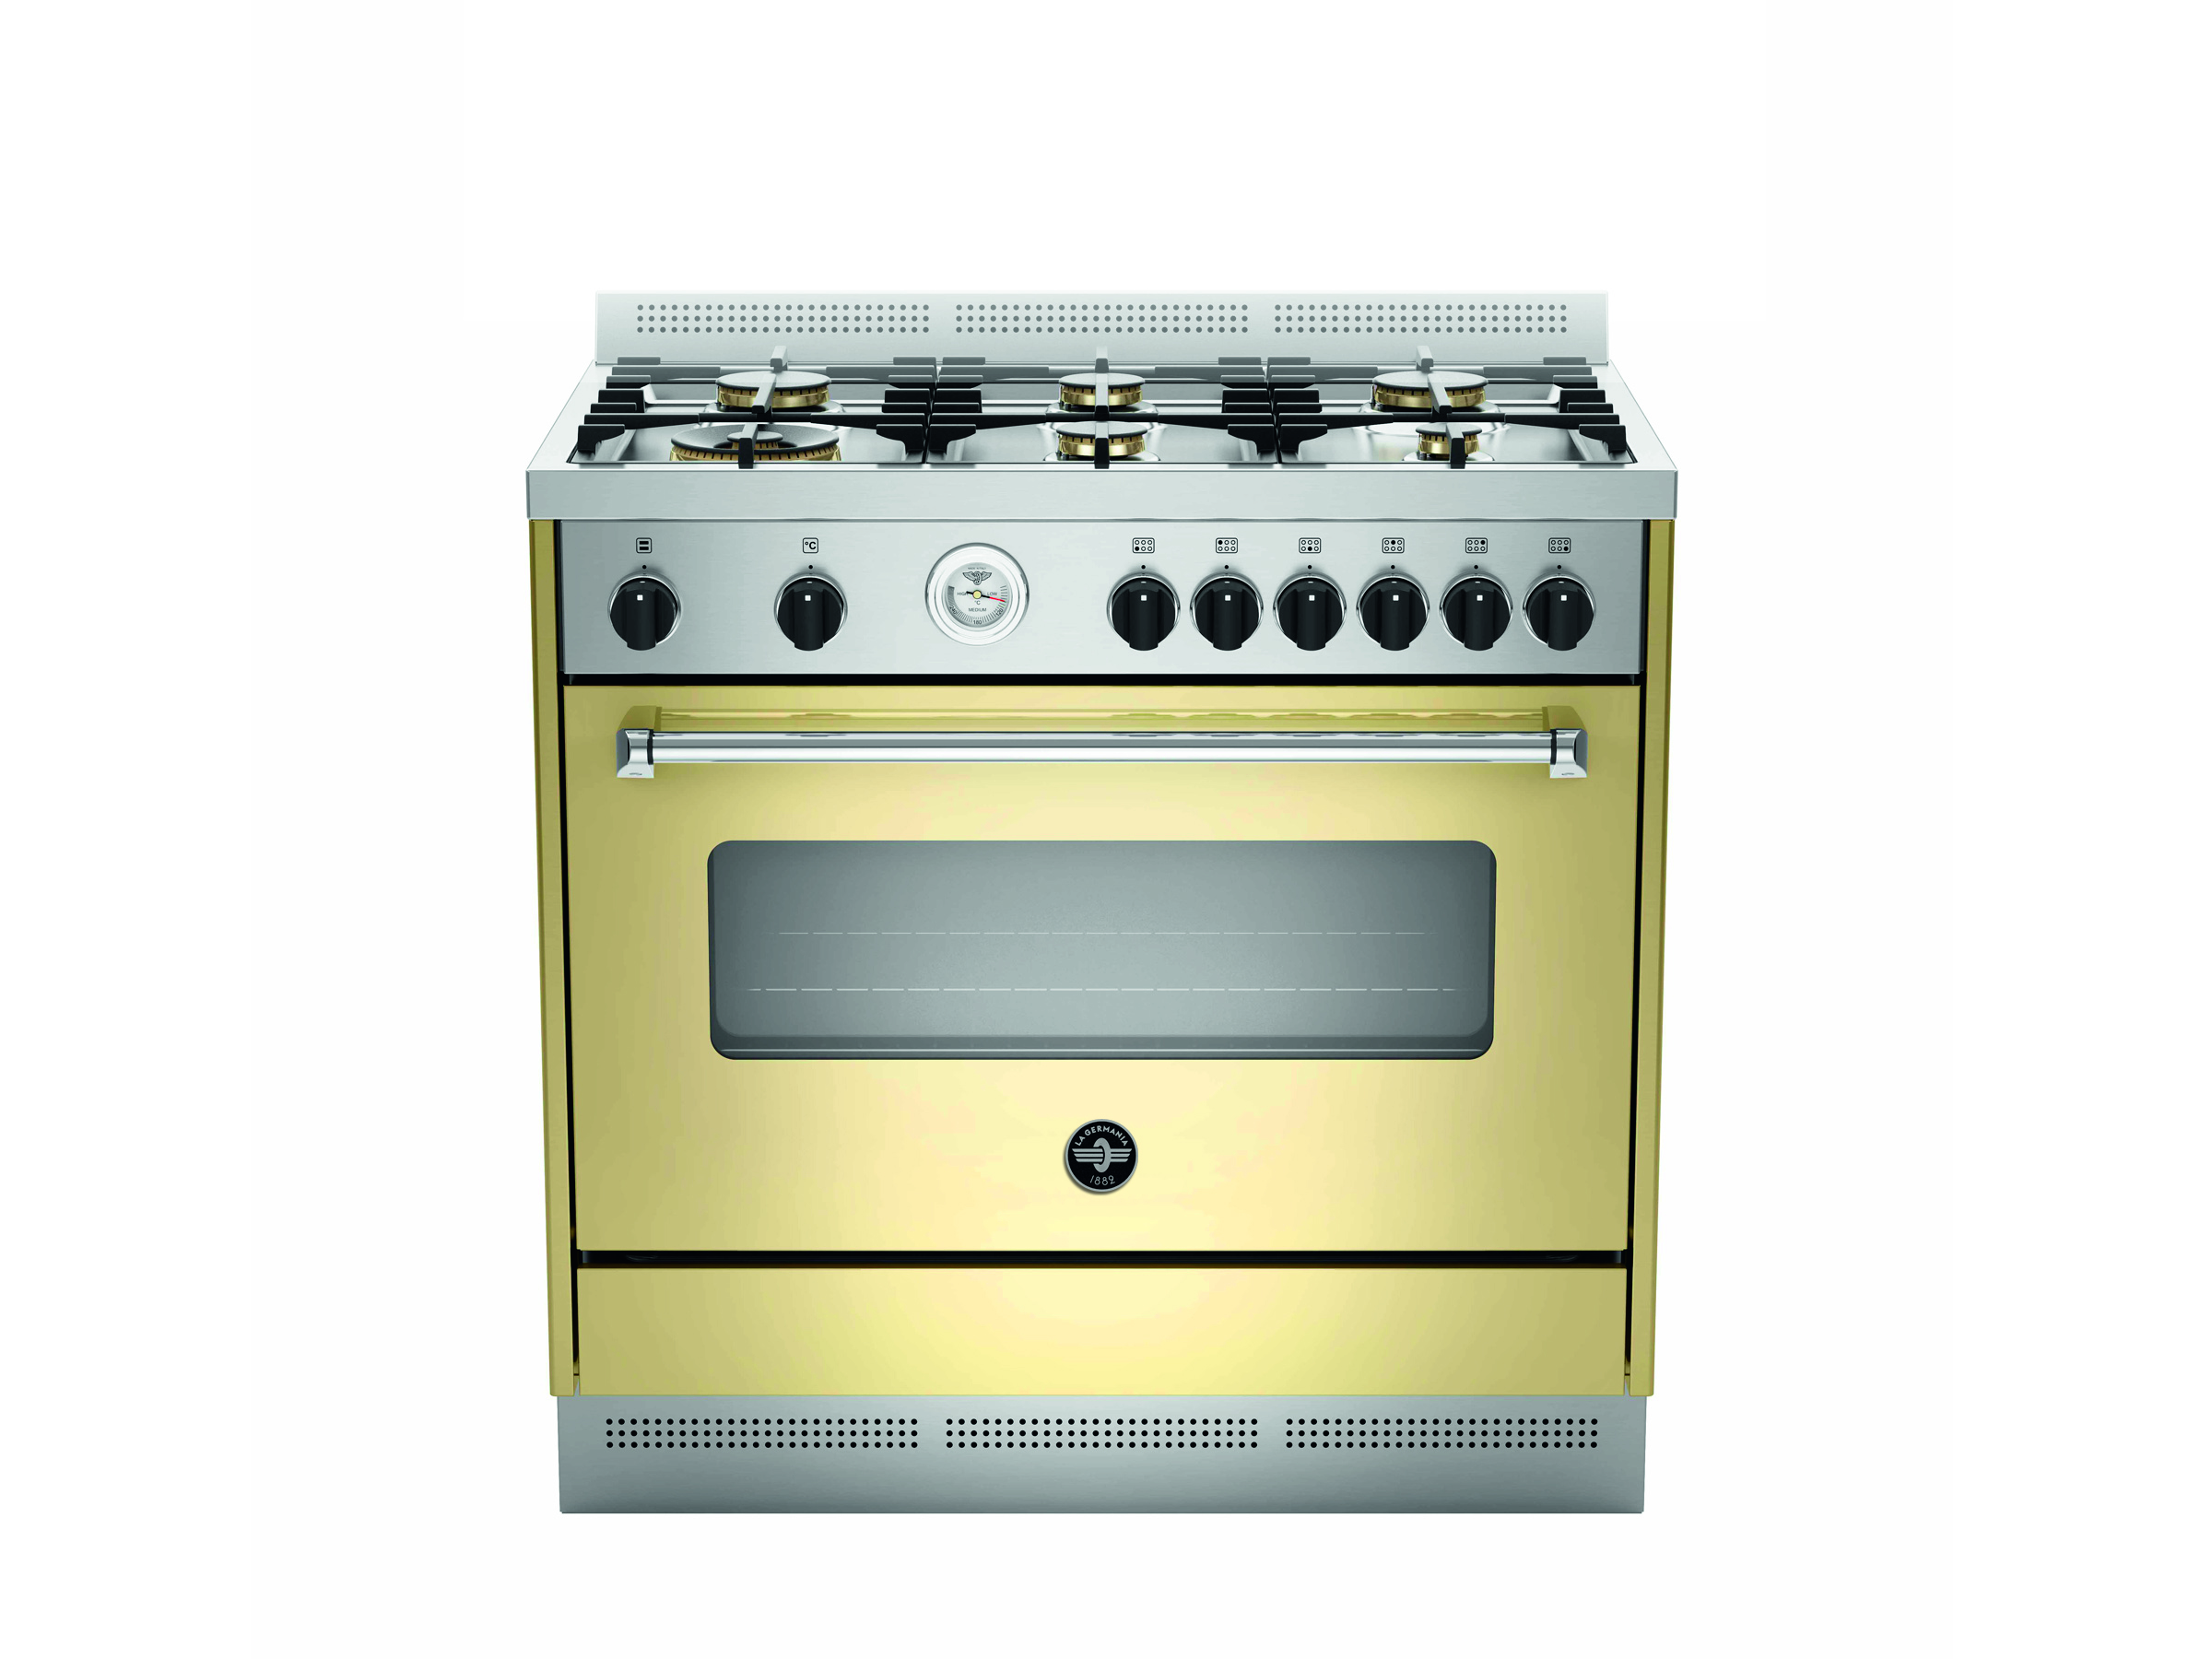 90 6-brass burners gas oven AX - La Germania